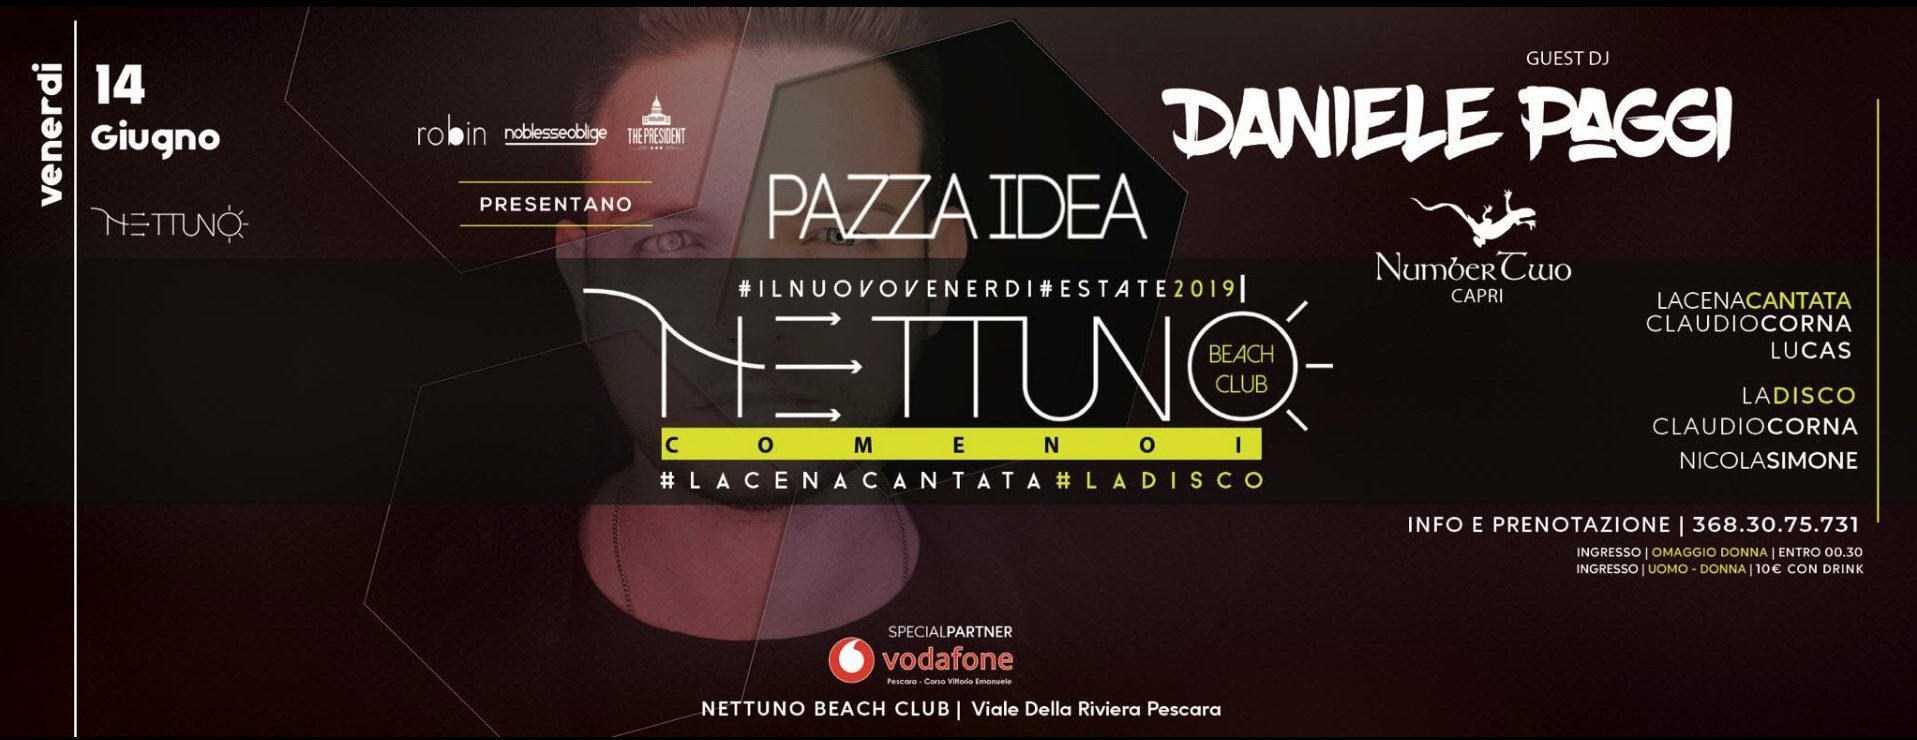 Daniele Paggi guest dj Nettuno Beach Club Pescara